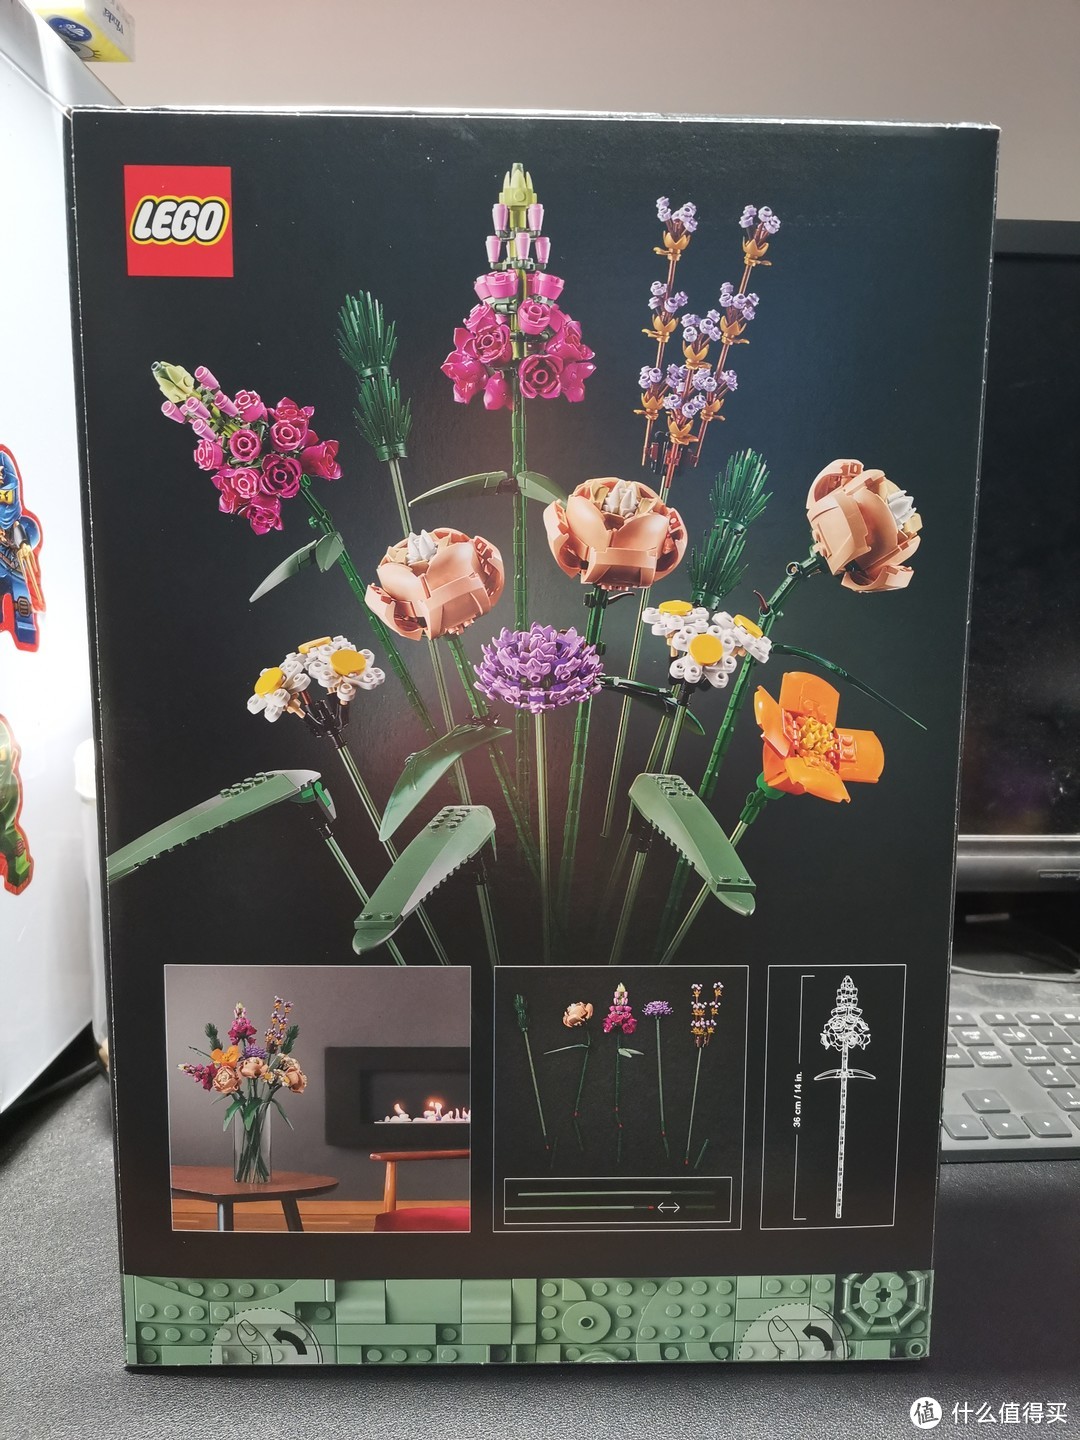 LEGO 植物收藏系列 10280 花束套装 评测